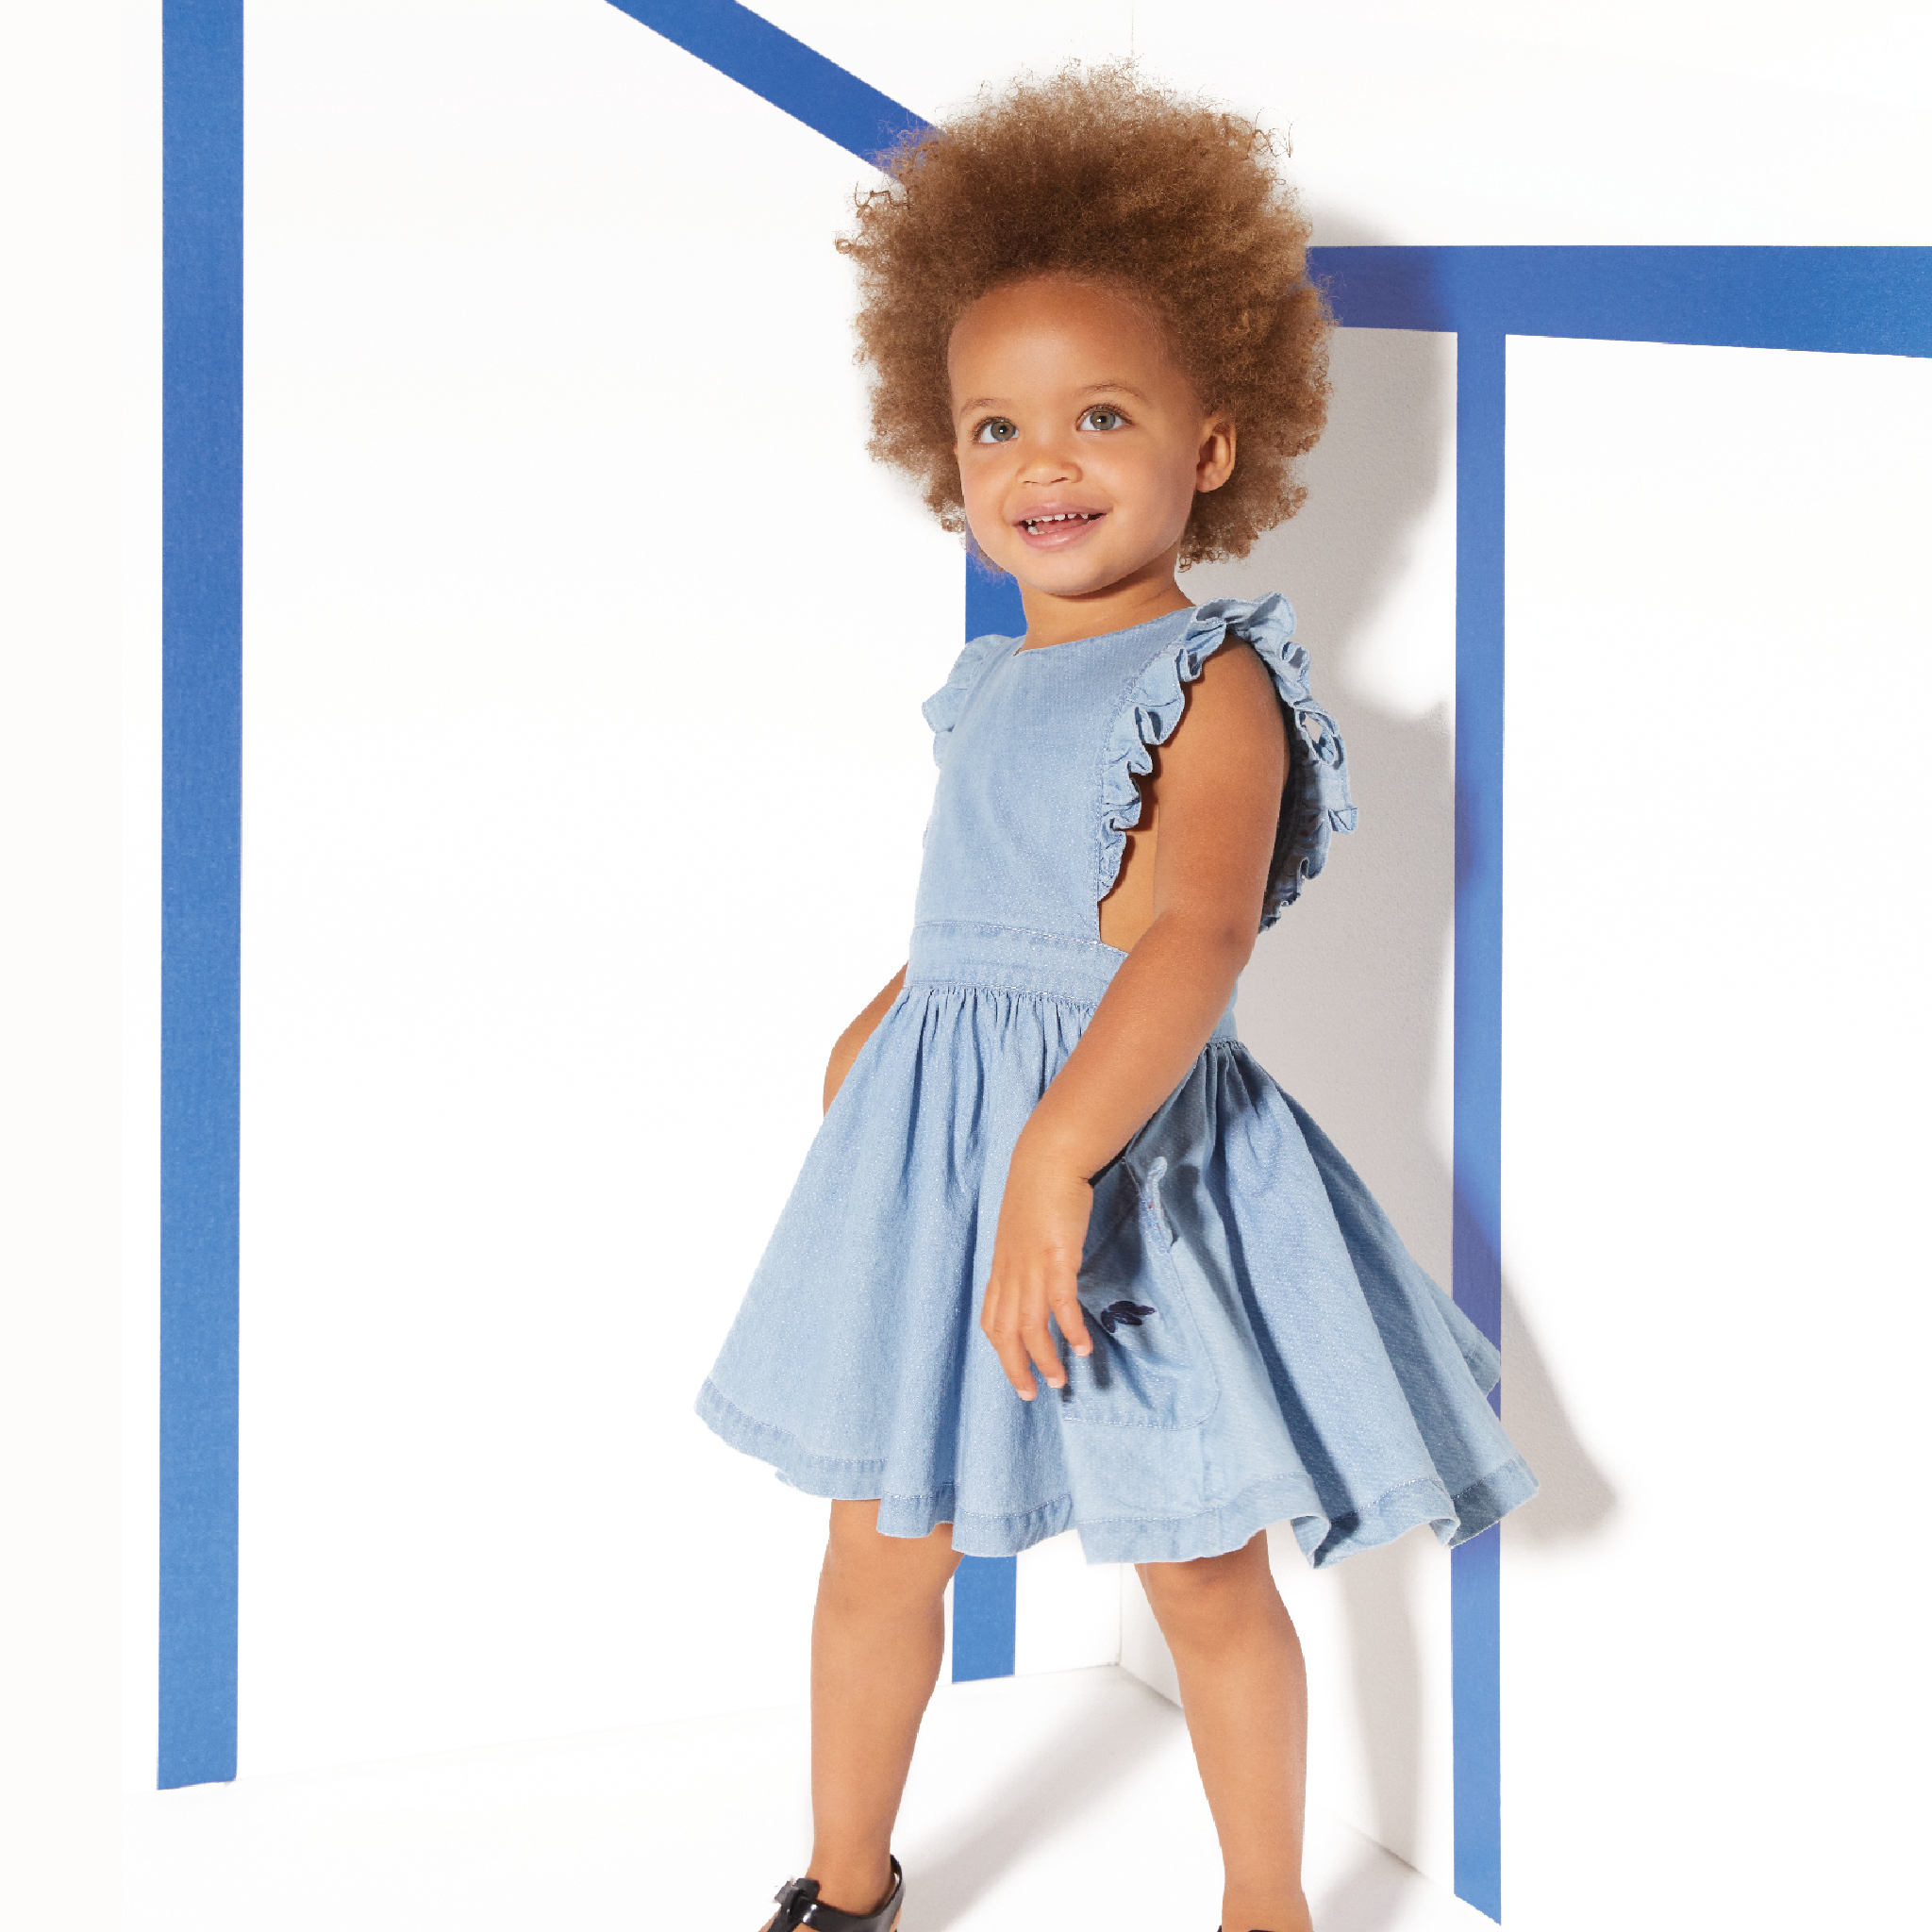 Buy MAVILLA GARMENTS Baby Girl Knee Length Frock Dress (0-3 Months, Blue)  at Amazon.in